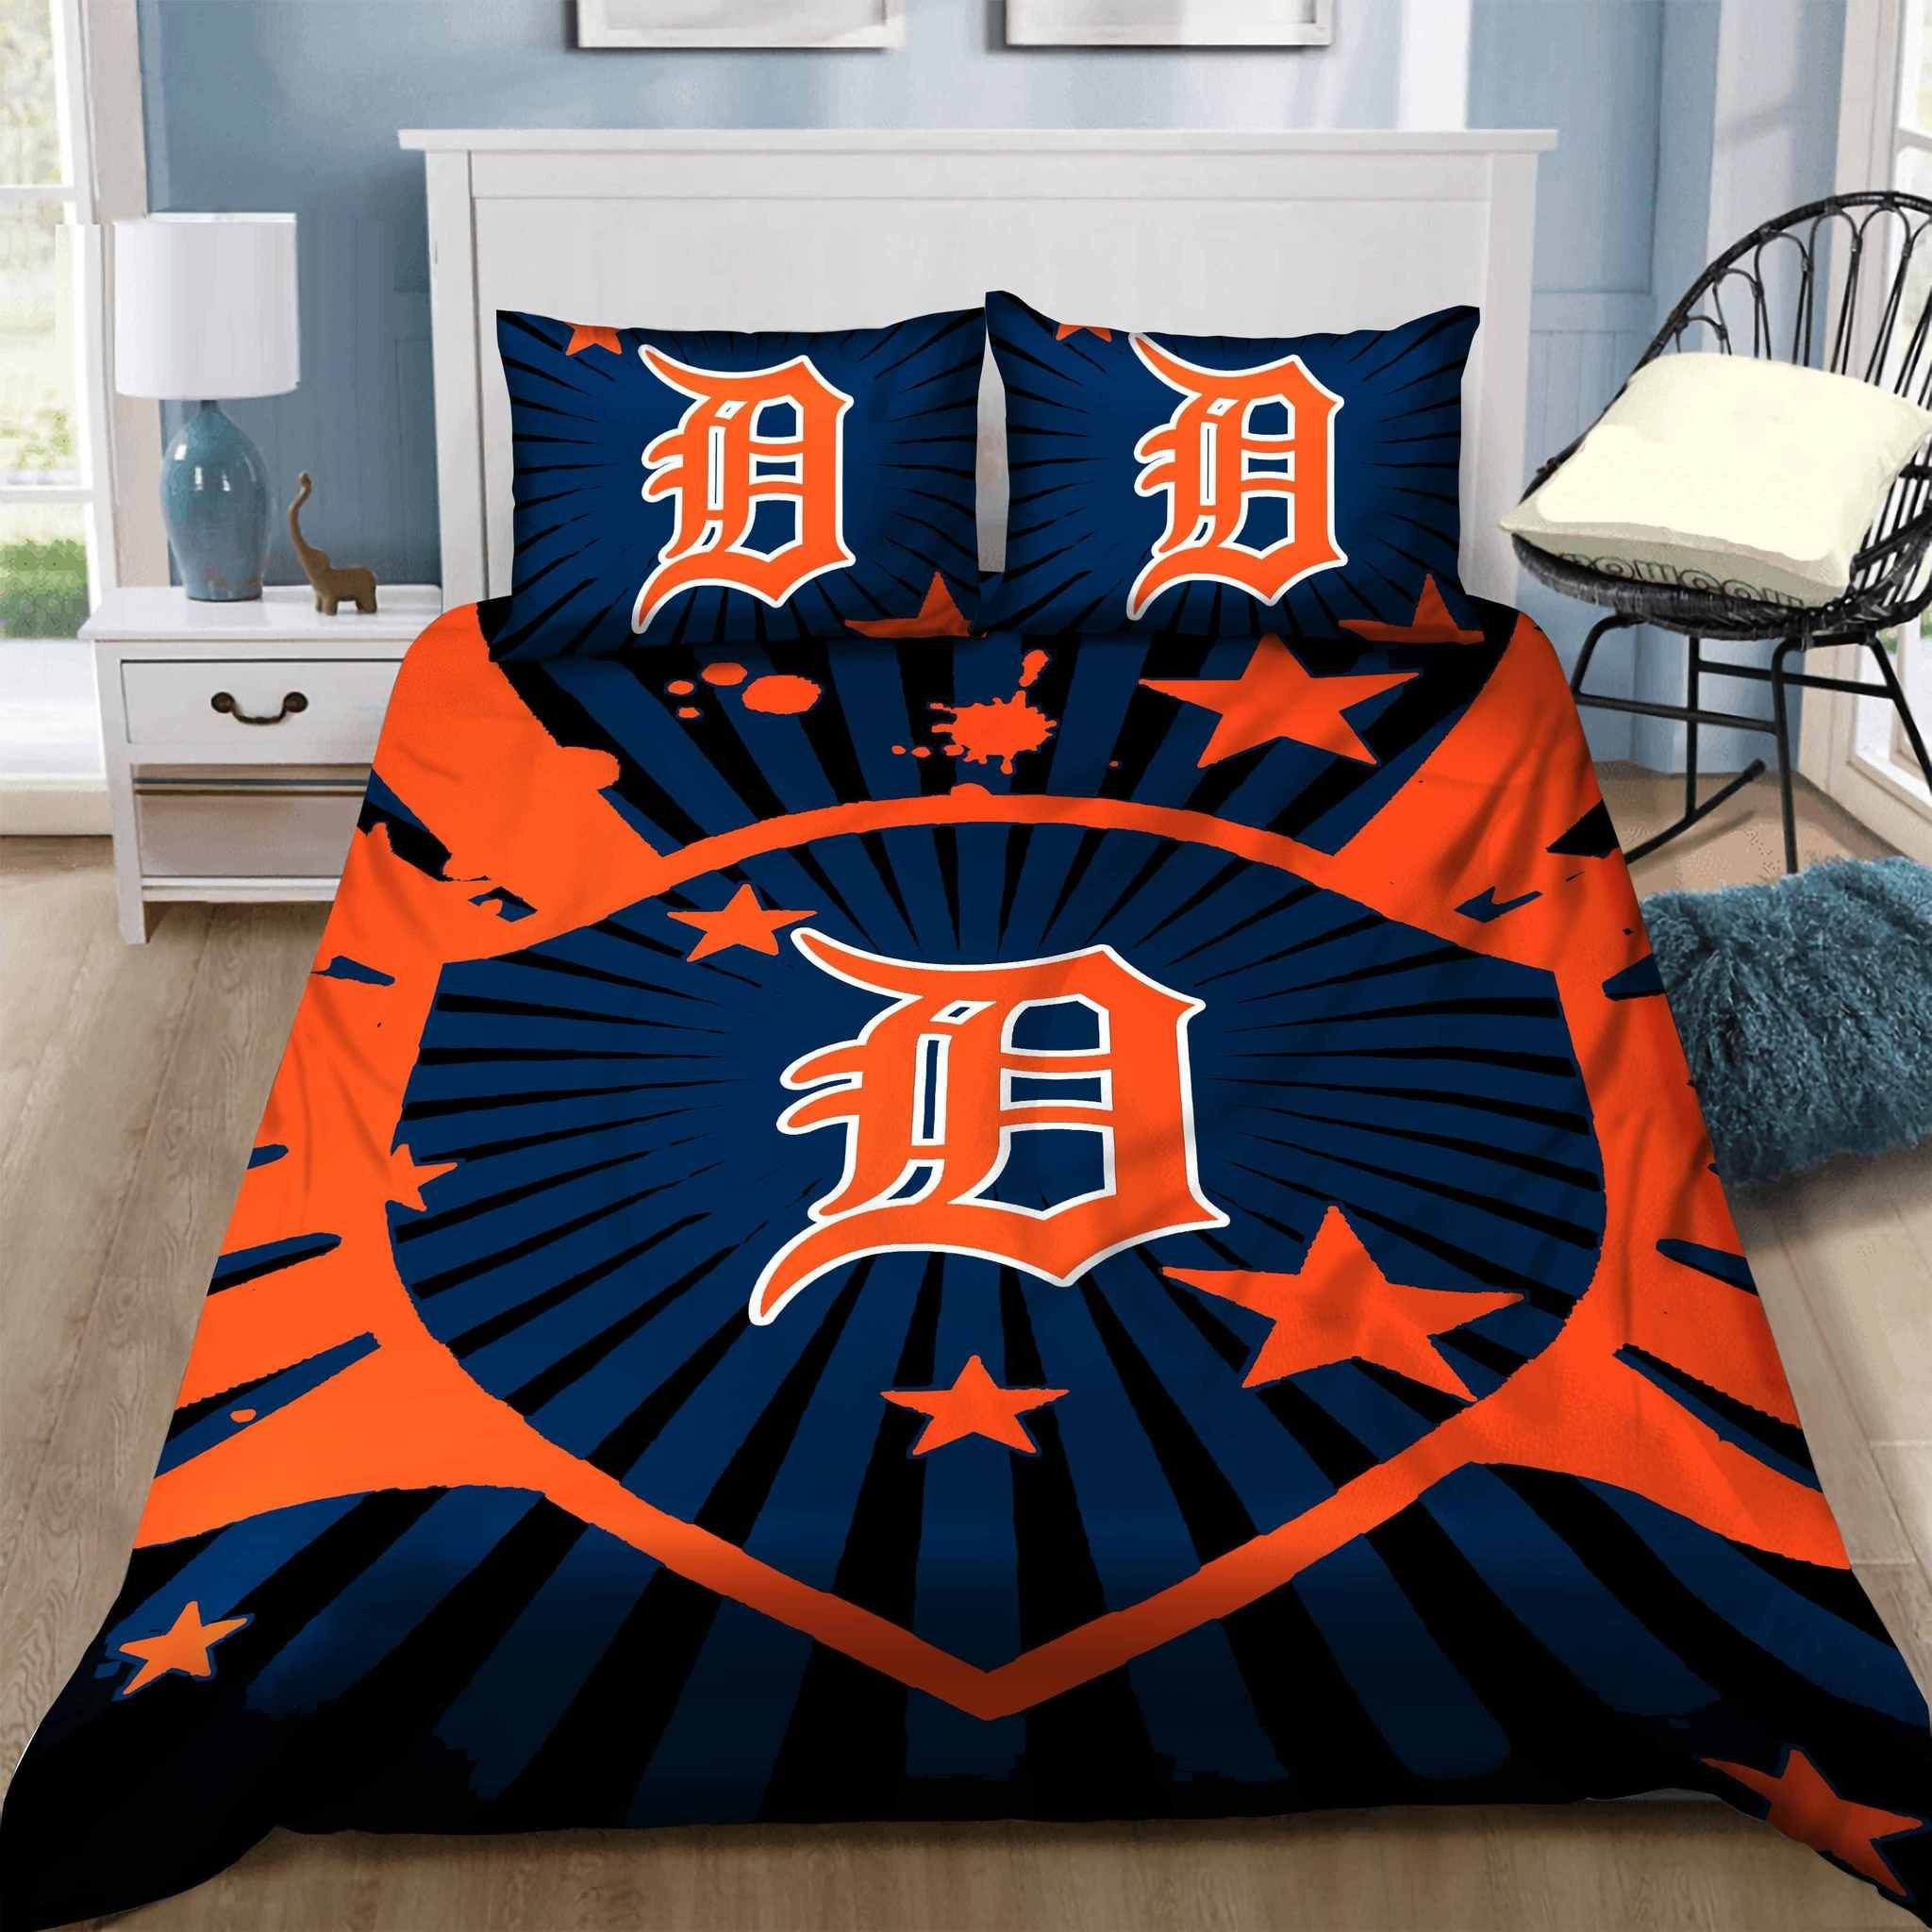 Detroit Tigers Bedding Set Sleepy (Duvet Cover & Pillow Cases). PLEASE